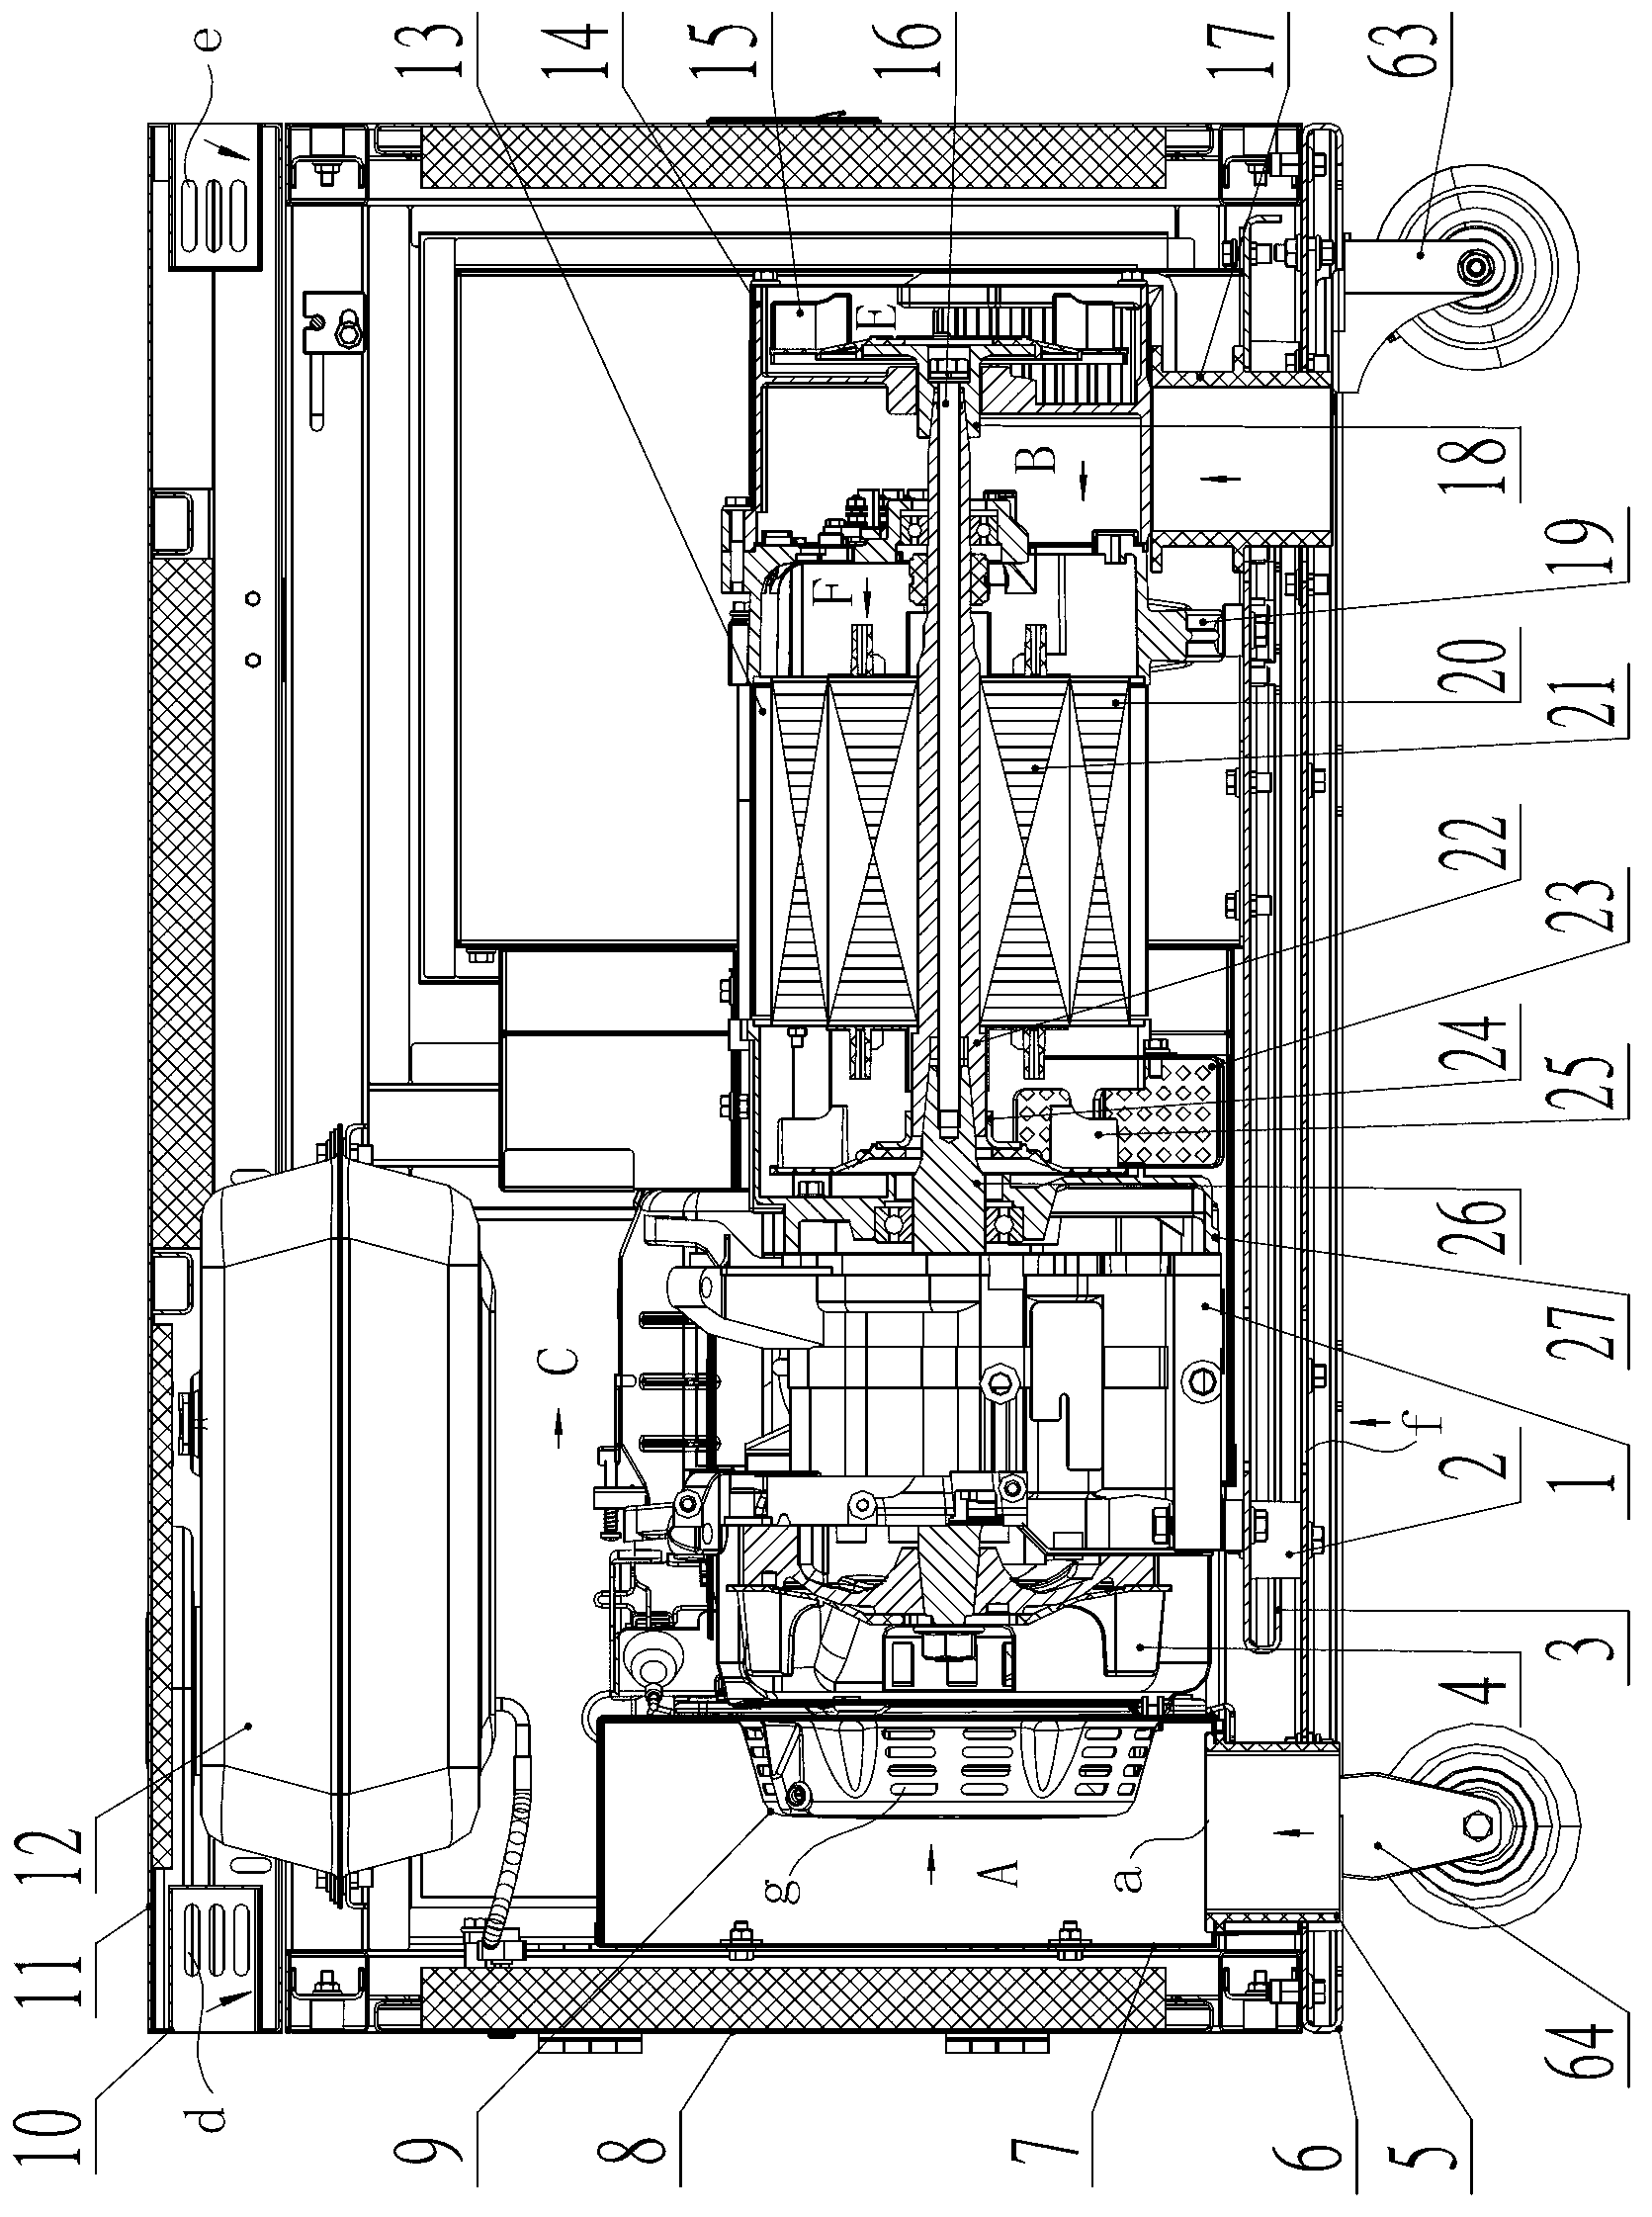 Engine-driven generator set